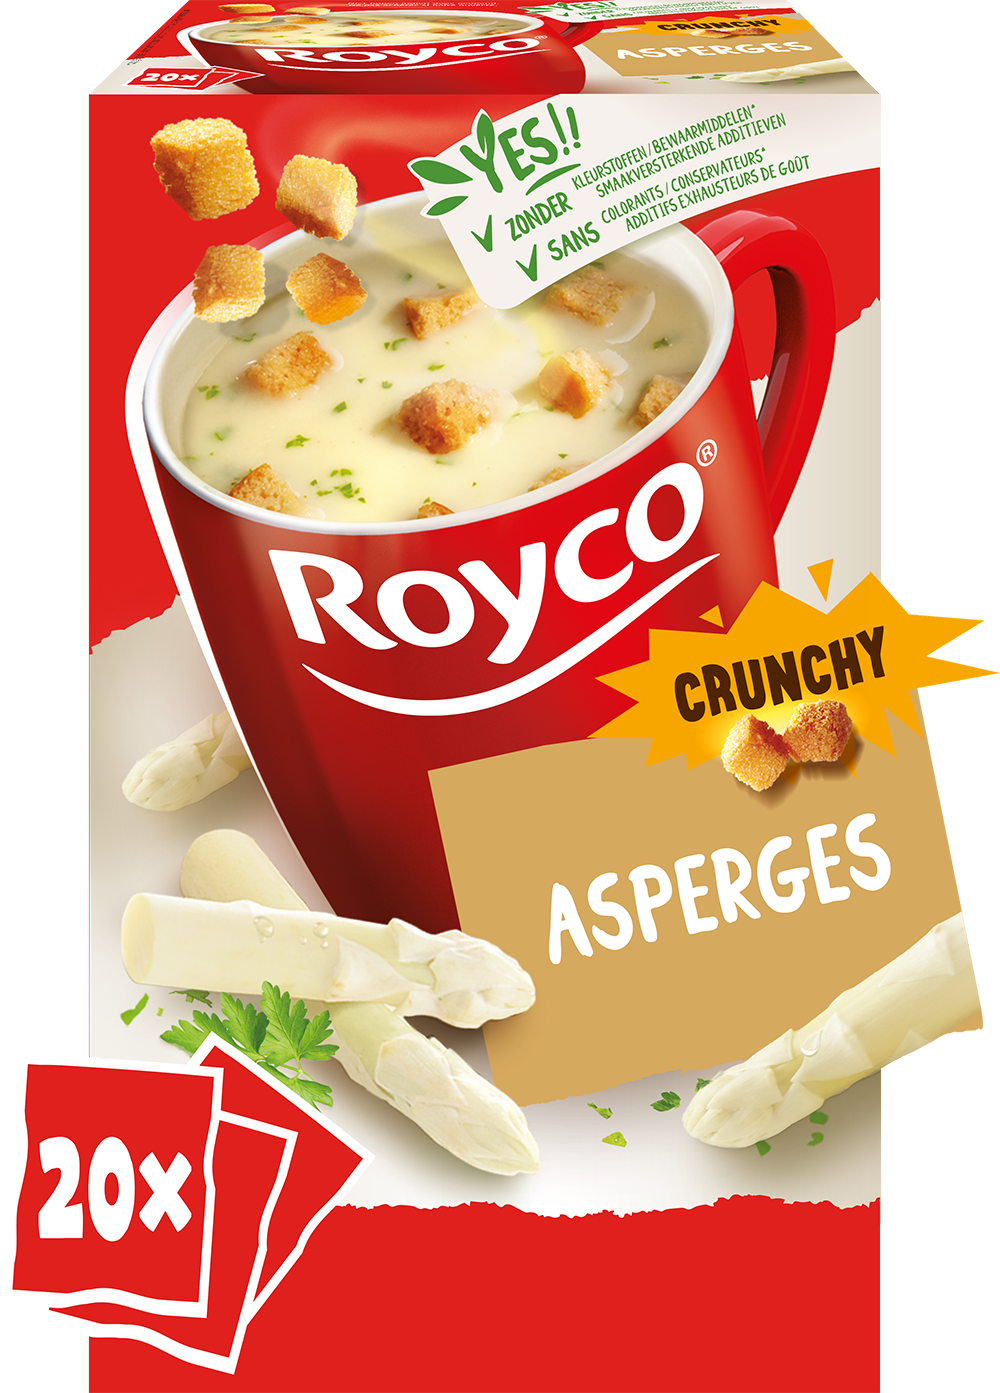 Royco Crunchy Asperges